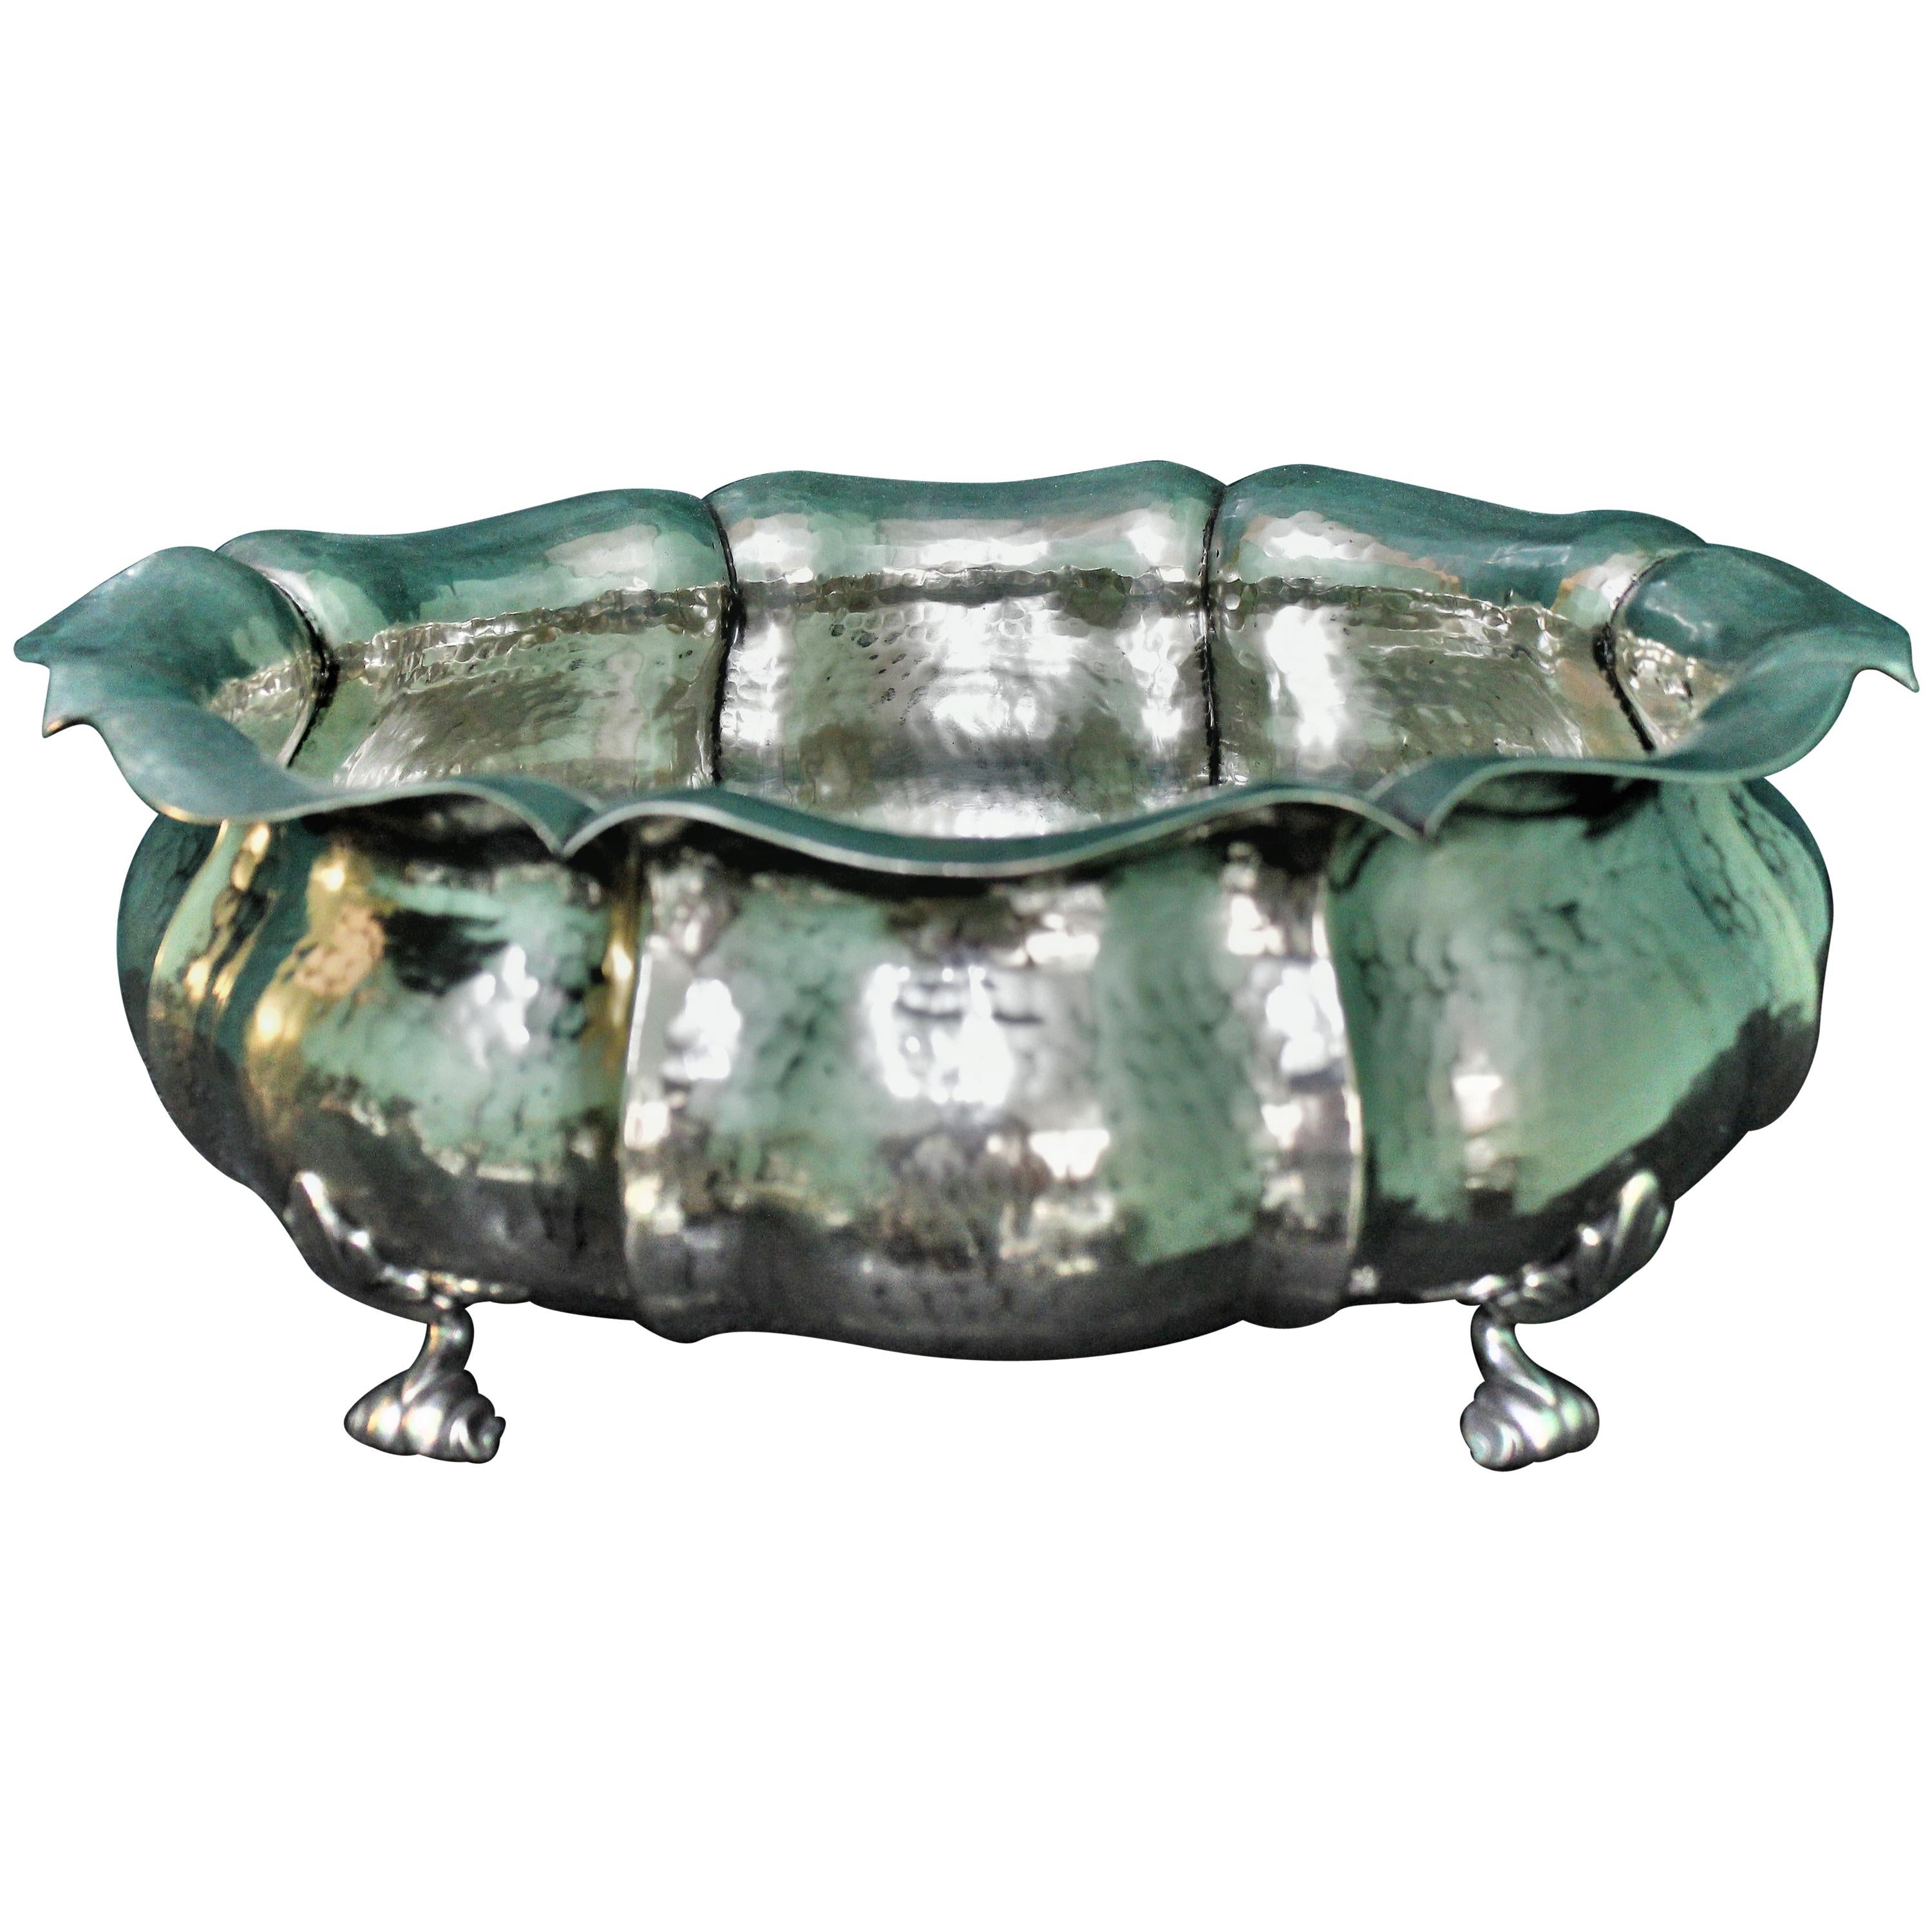 Brandimarte 20th Century Italian Art Deco Hammered Silver Bowl, 1950s For Sale